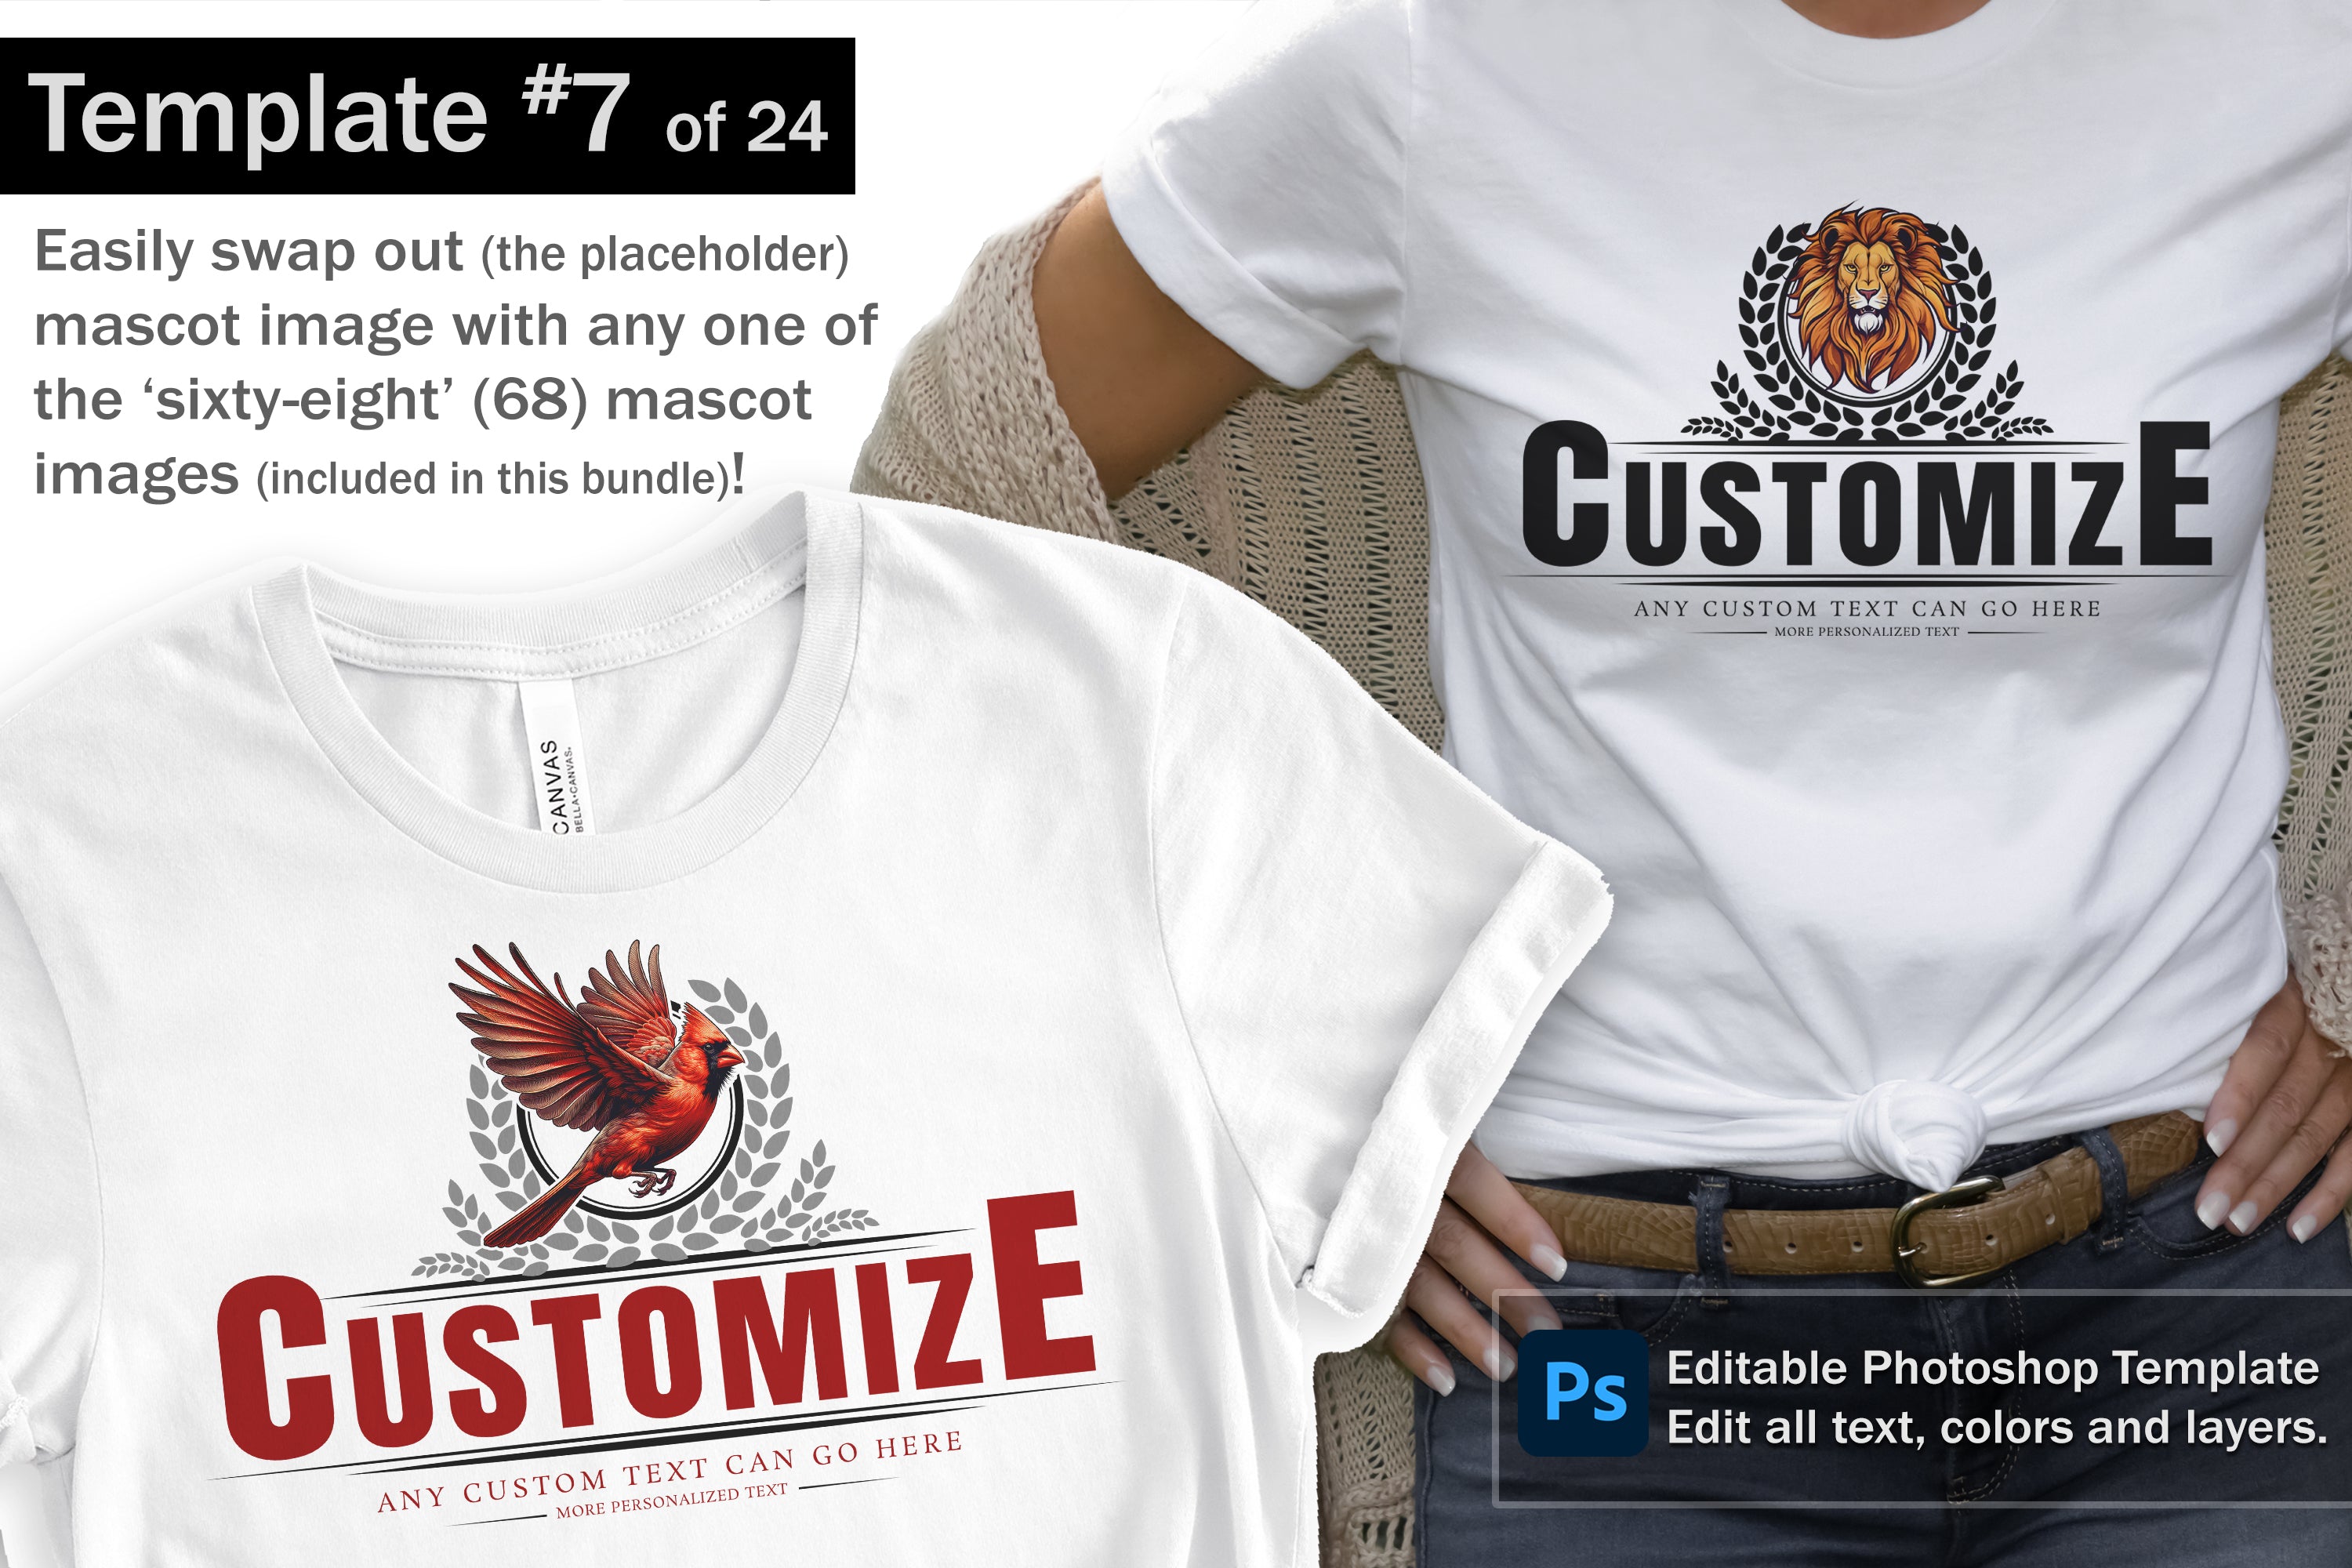 Hawk Logo and DIY T-shirt Design Bundle